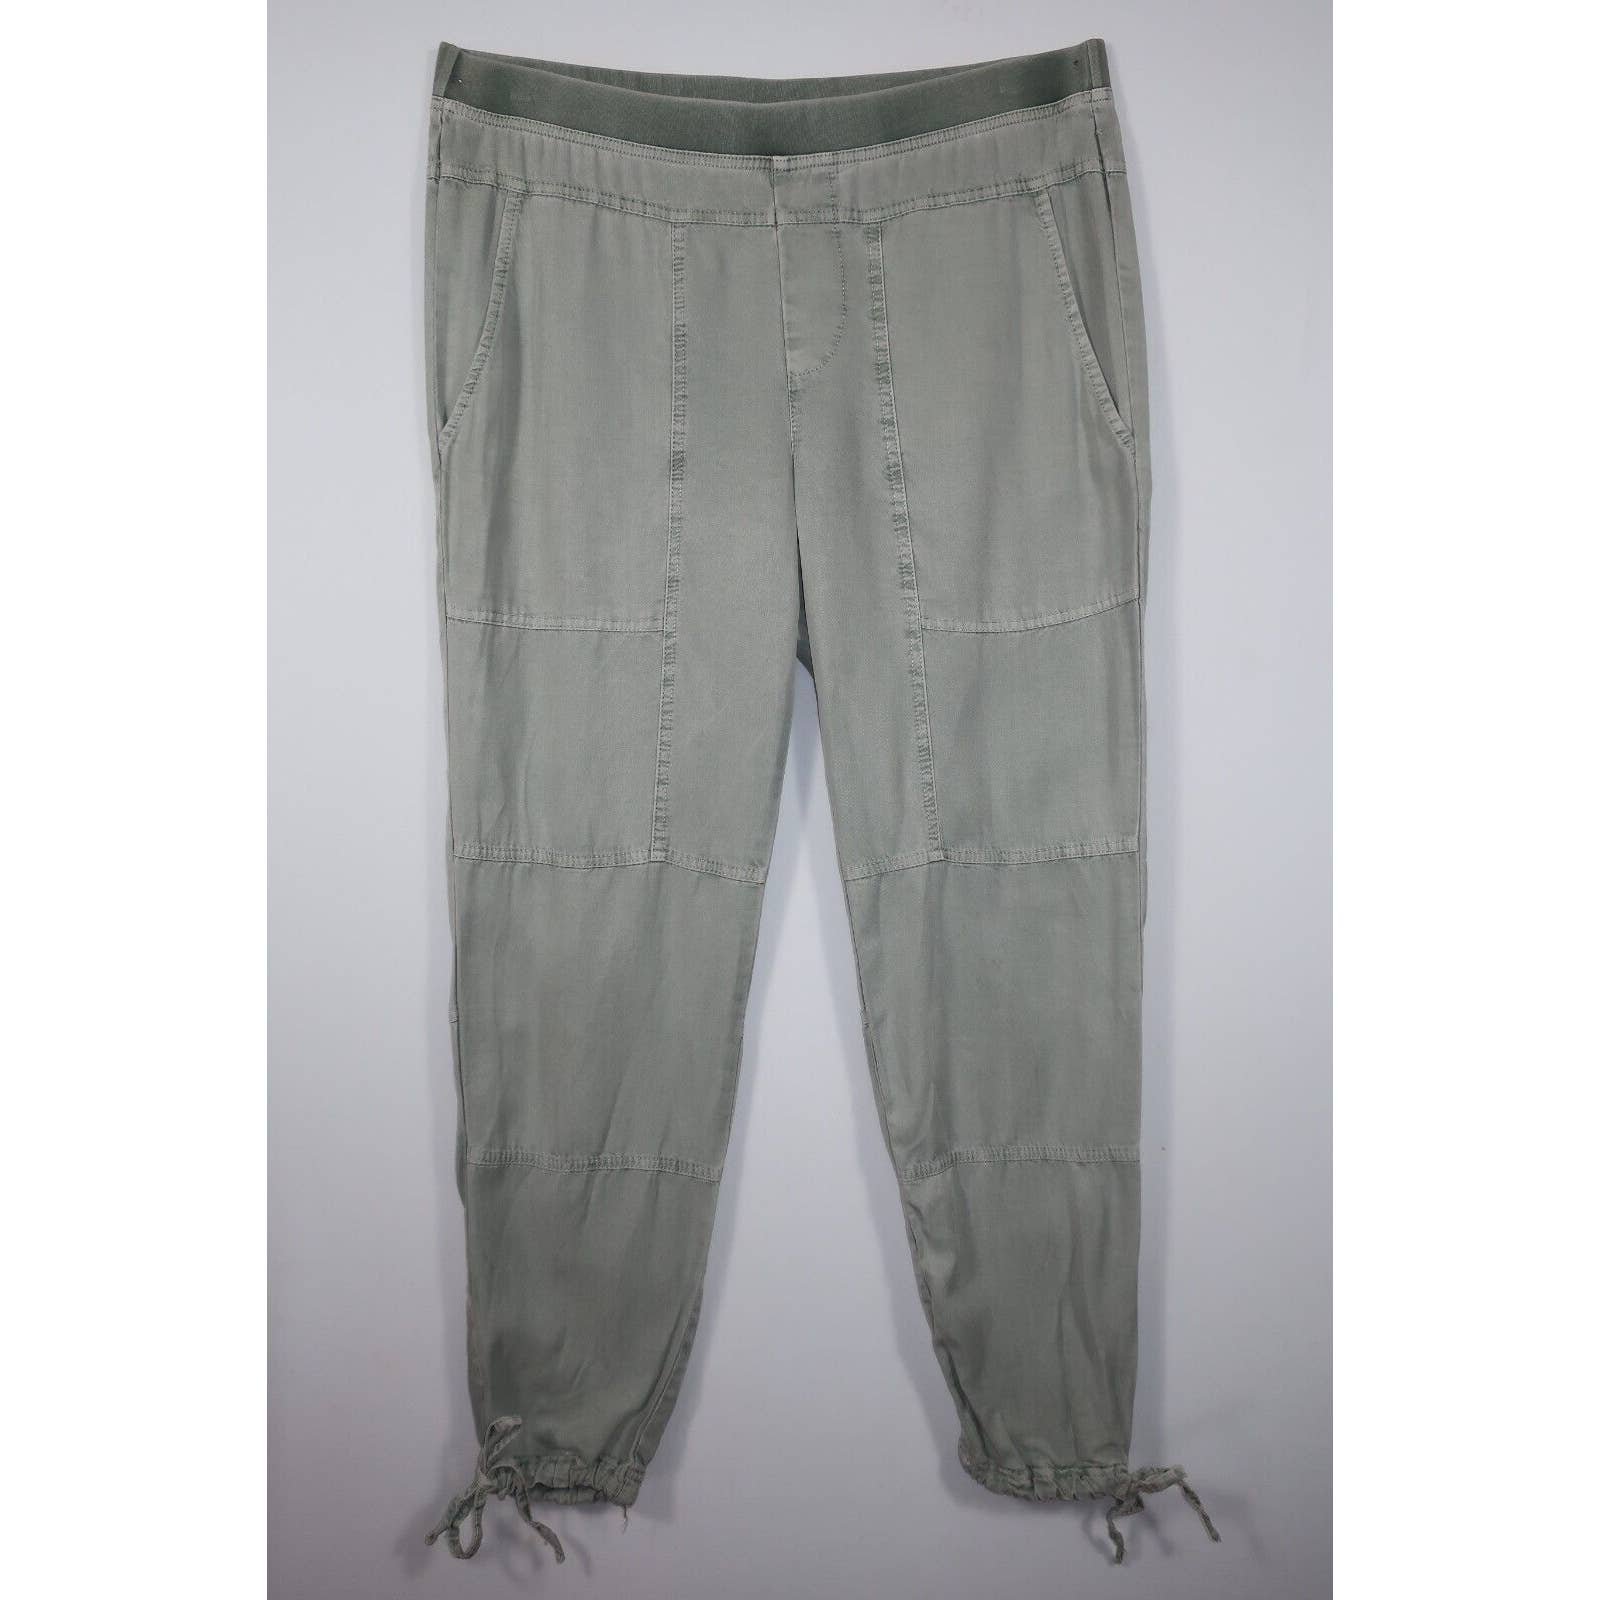 High quality XCVI Sage Green Pants Pull On Elastic Draw